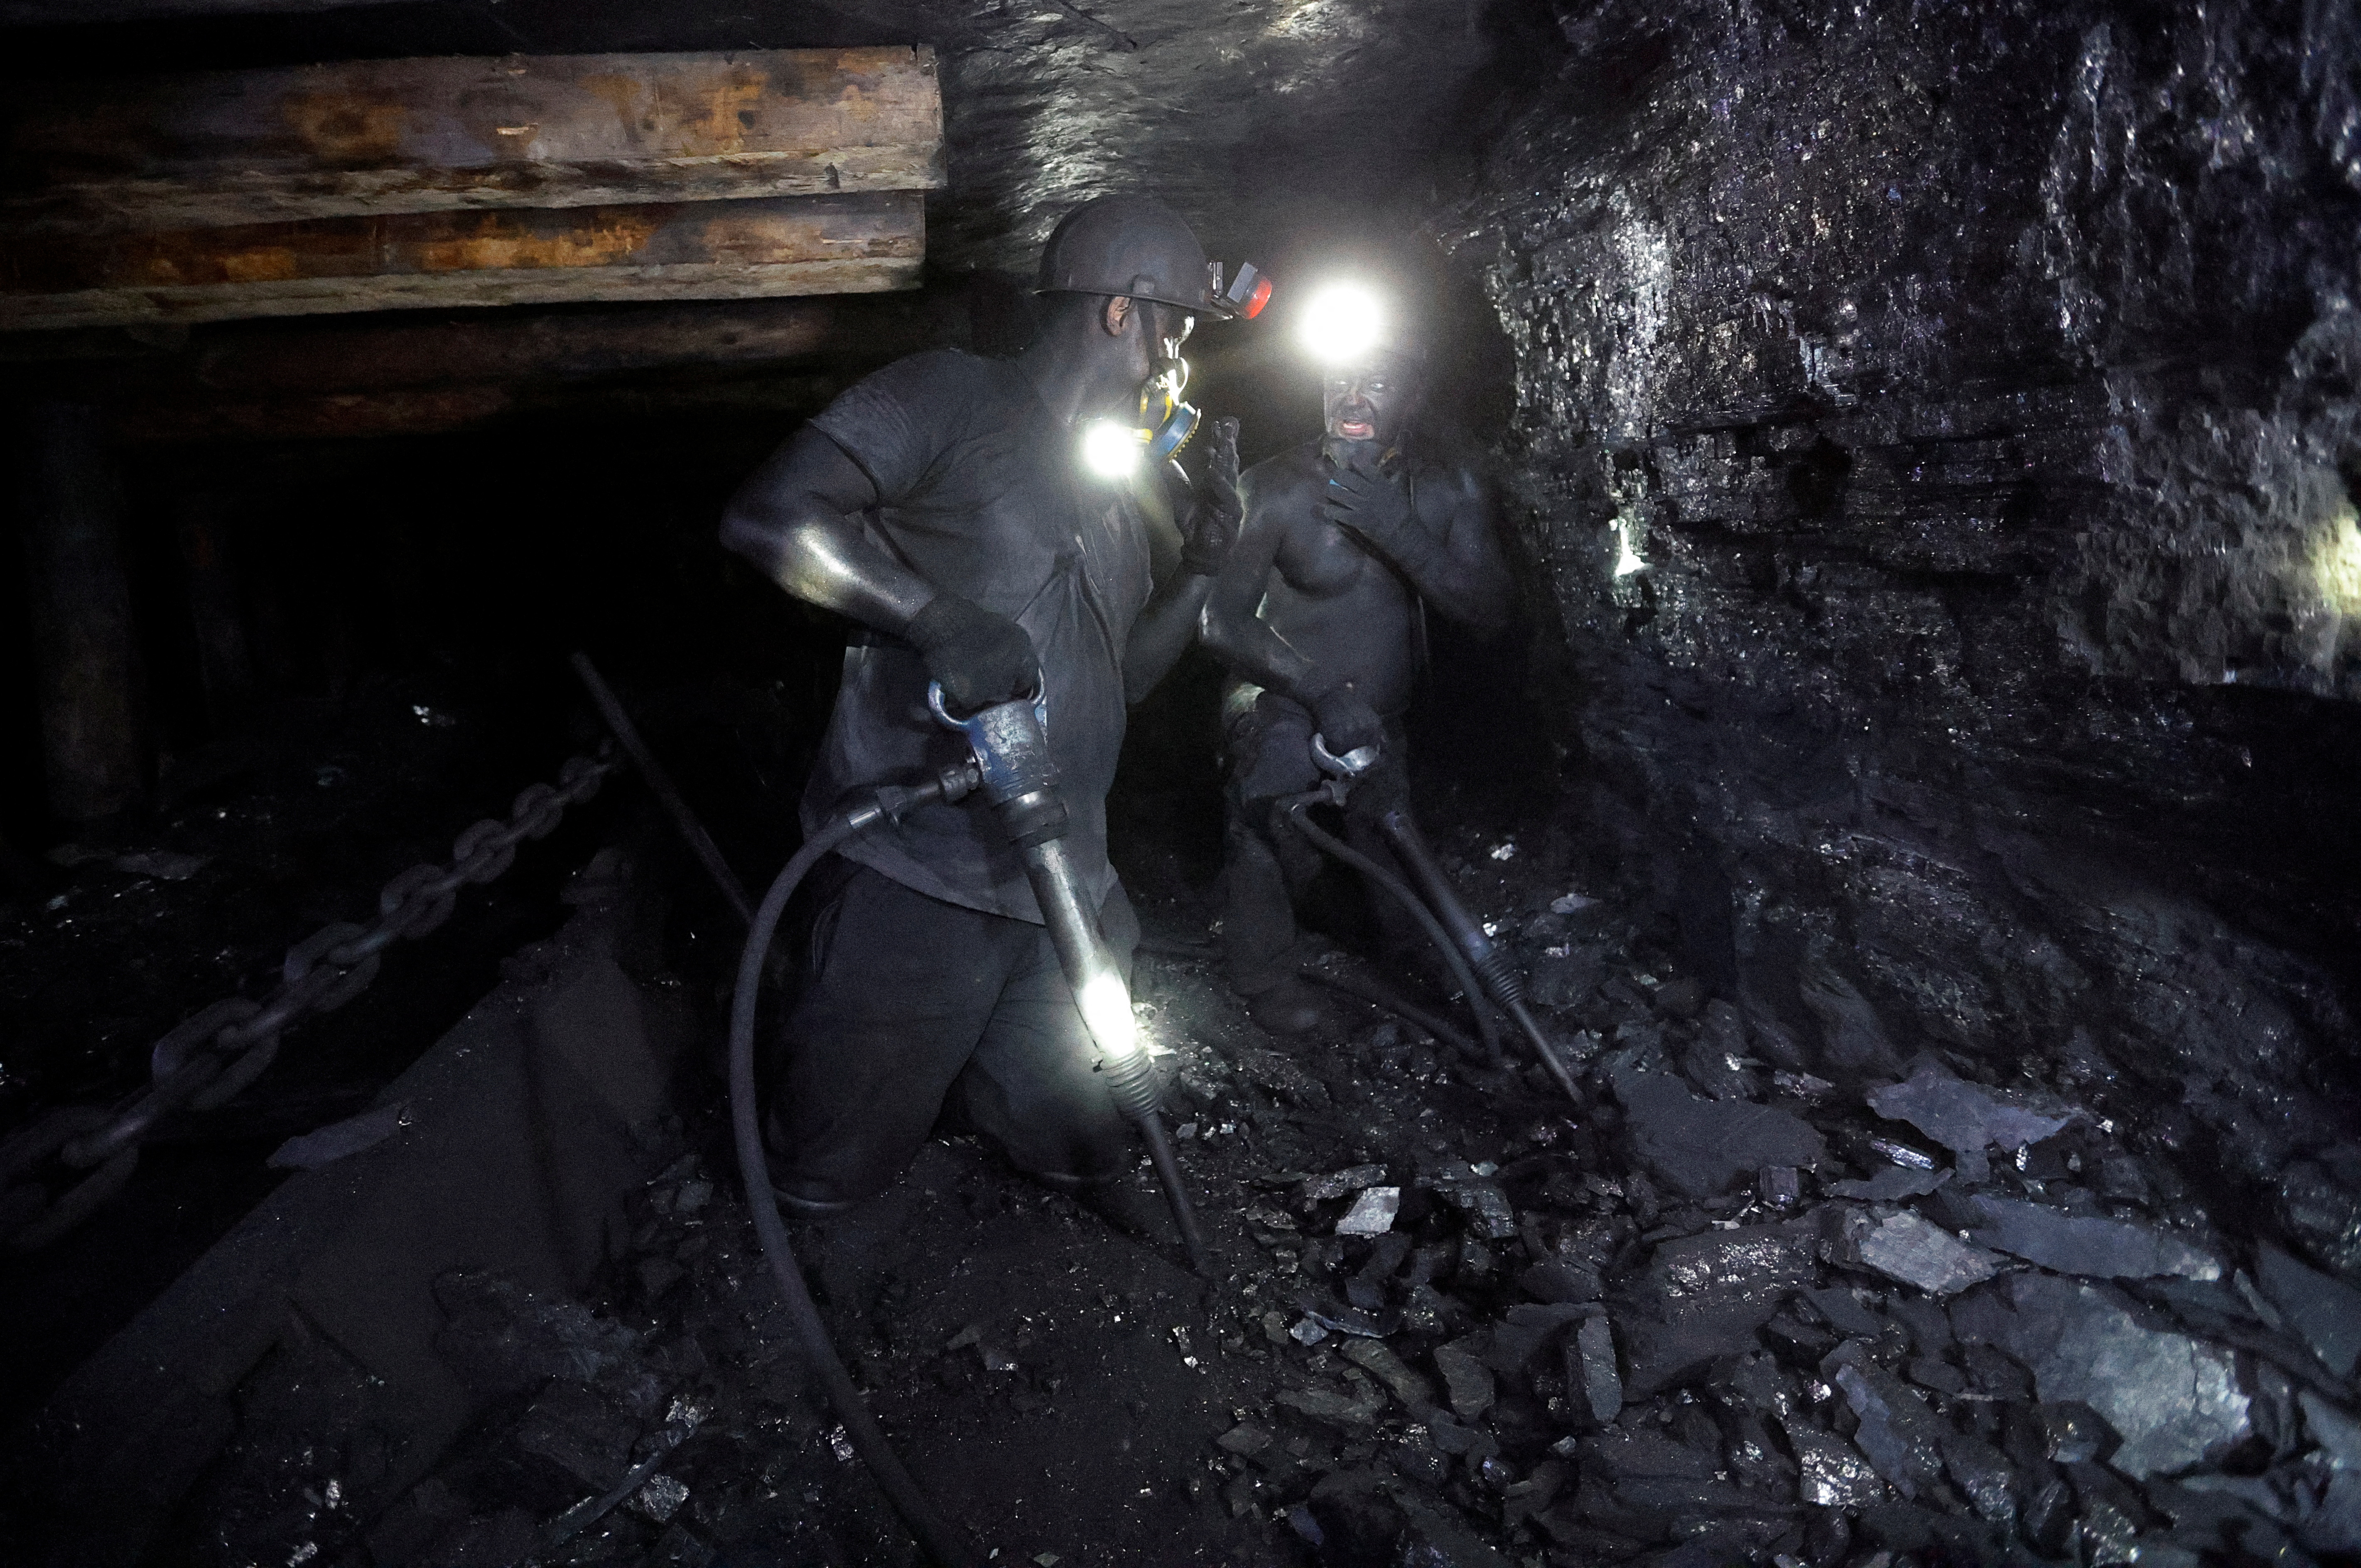 Miners work at a coal mine in Chystiakove